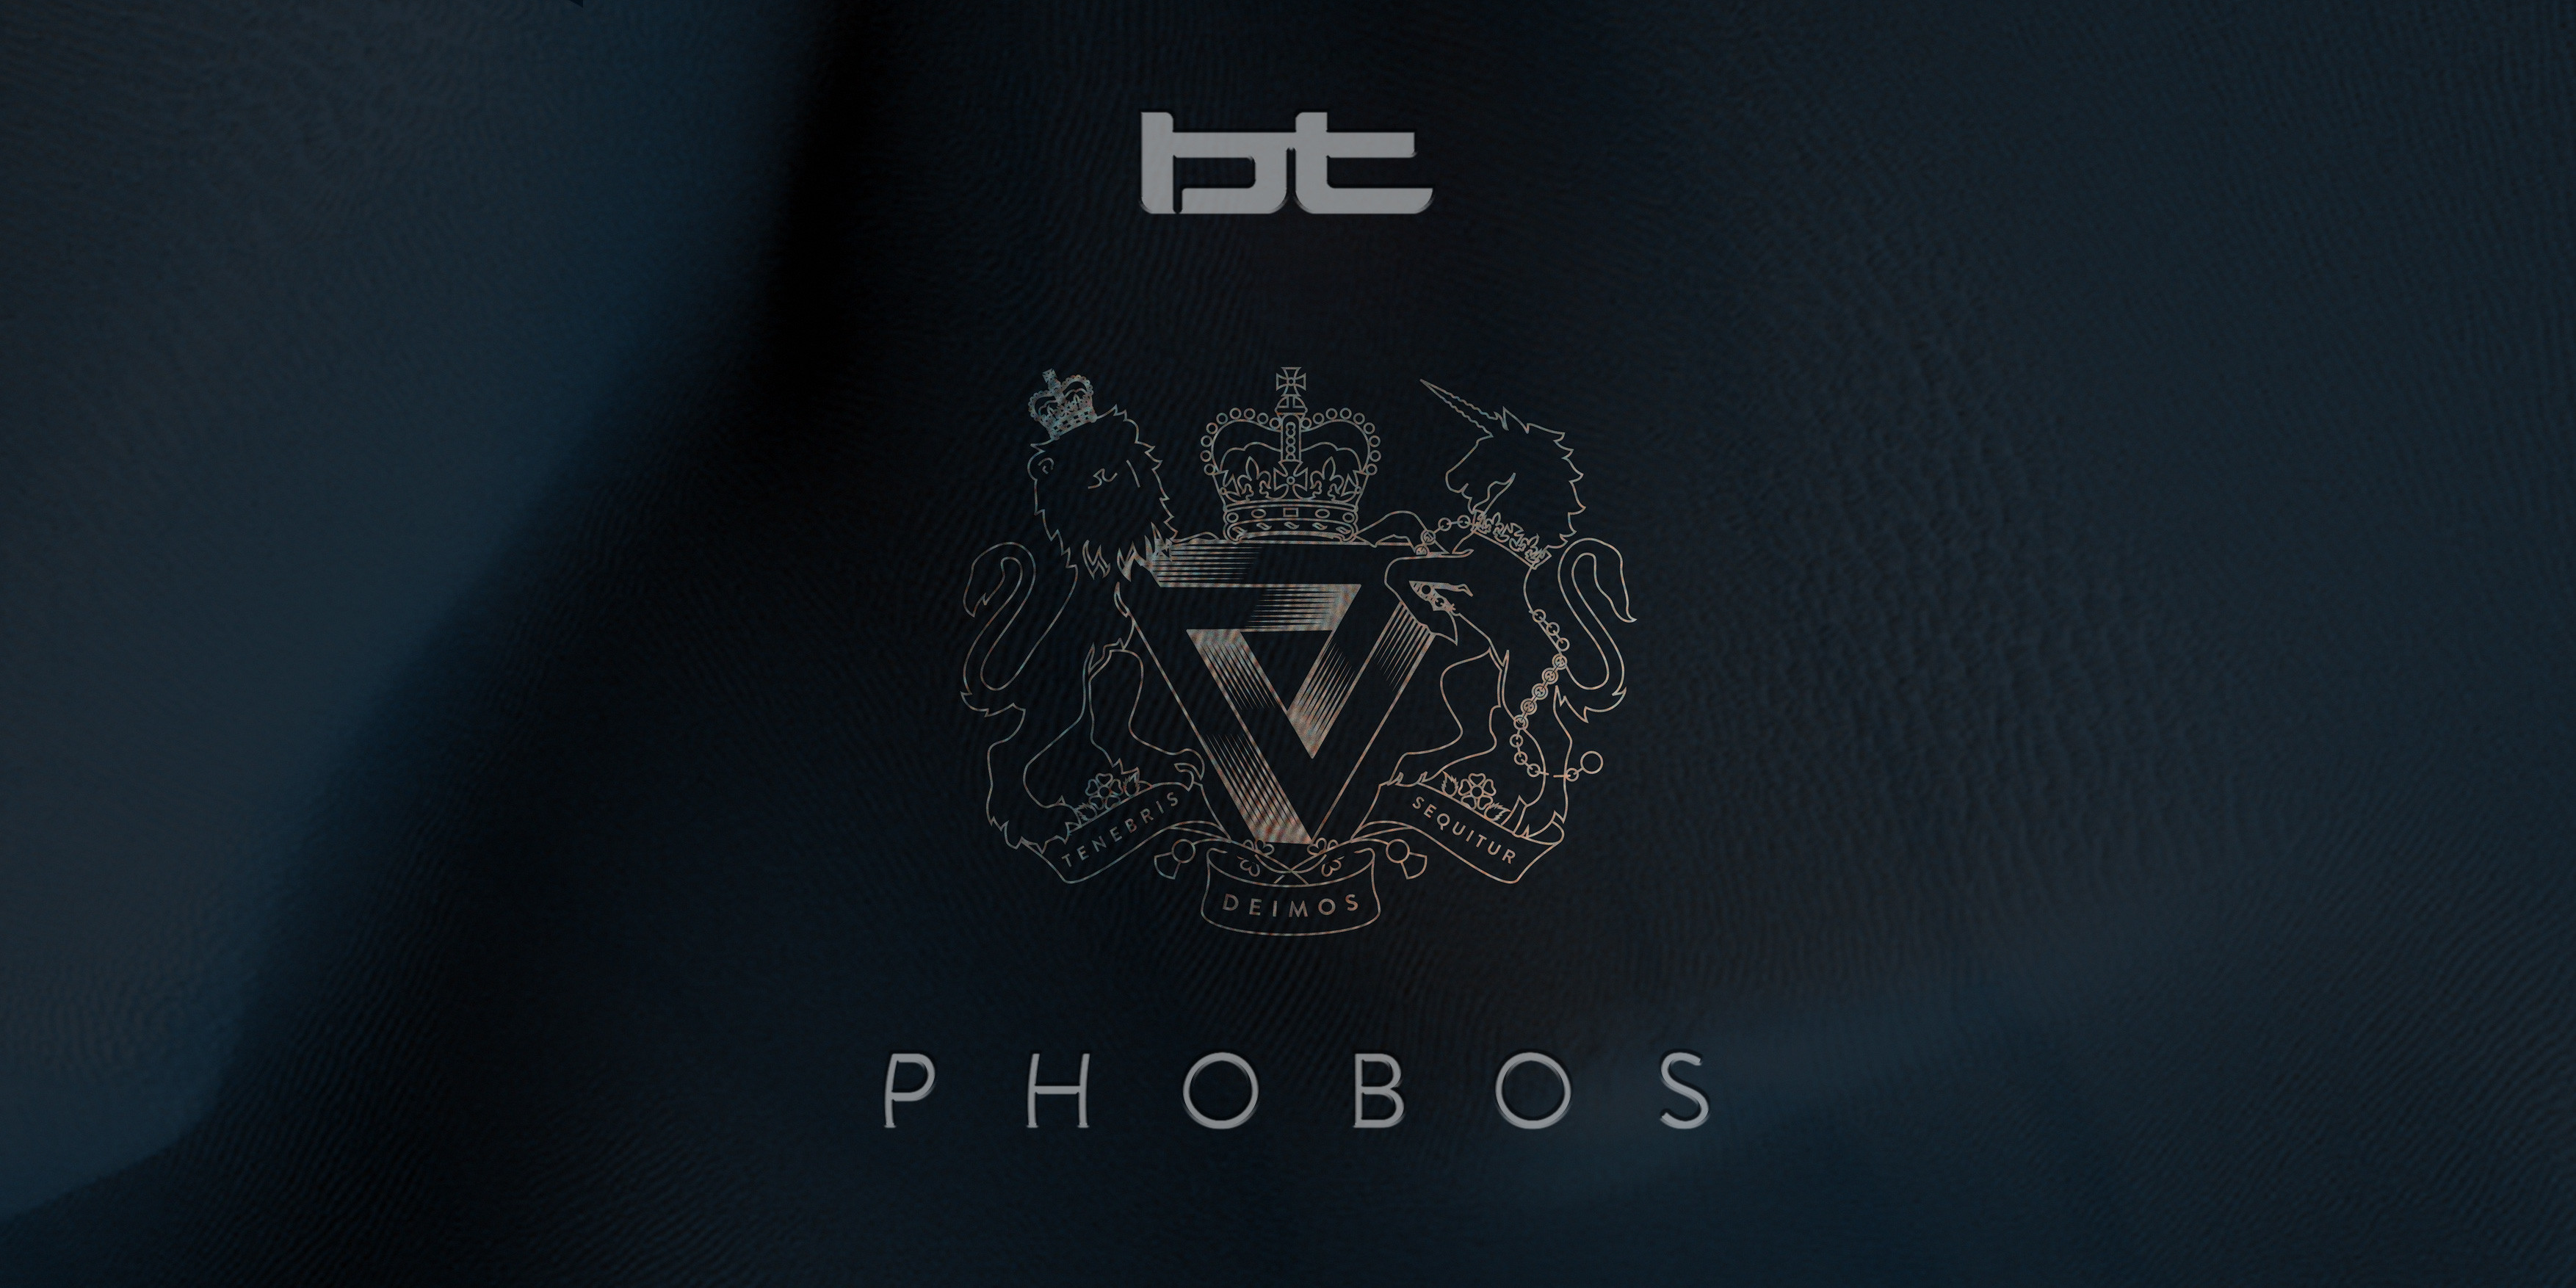 BT Phobos — Spitfire Audio image pic photo